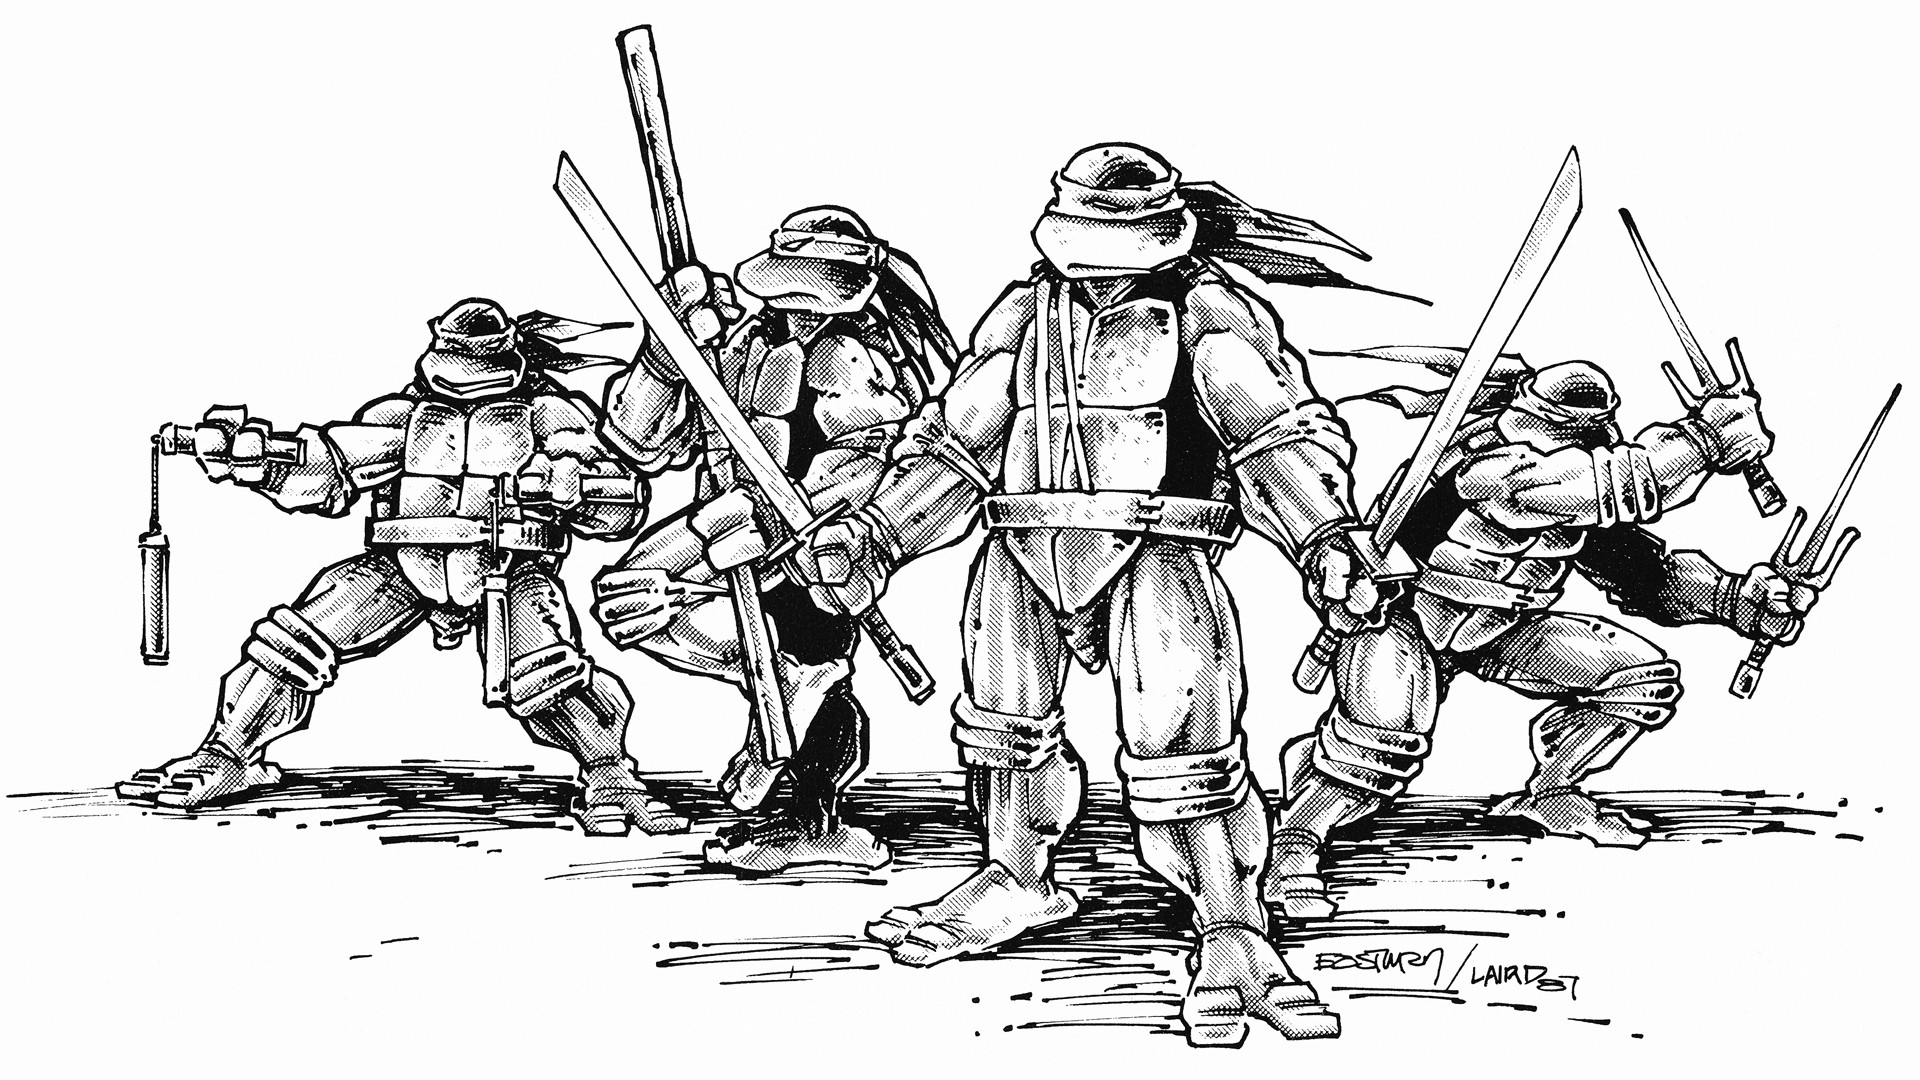 General 1920x1080 comics Teenage Mutant Ninja Turtles comic art monochrome digital art simple background watermarked